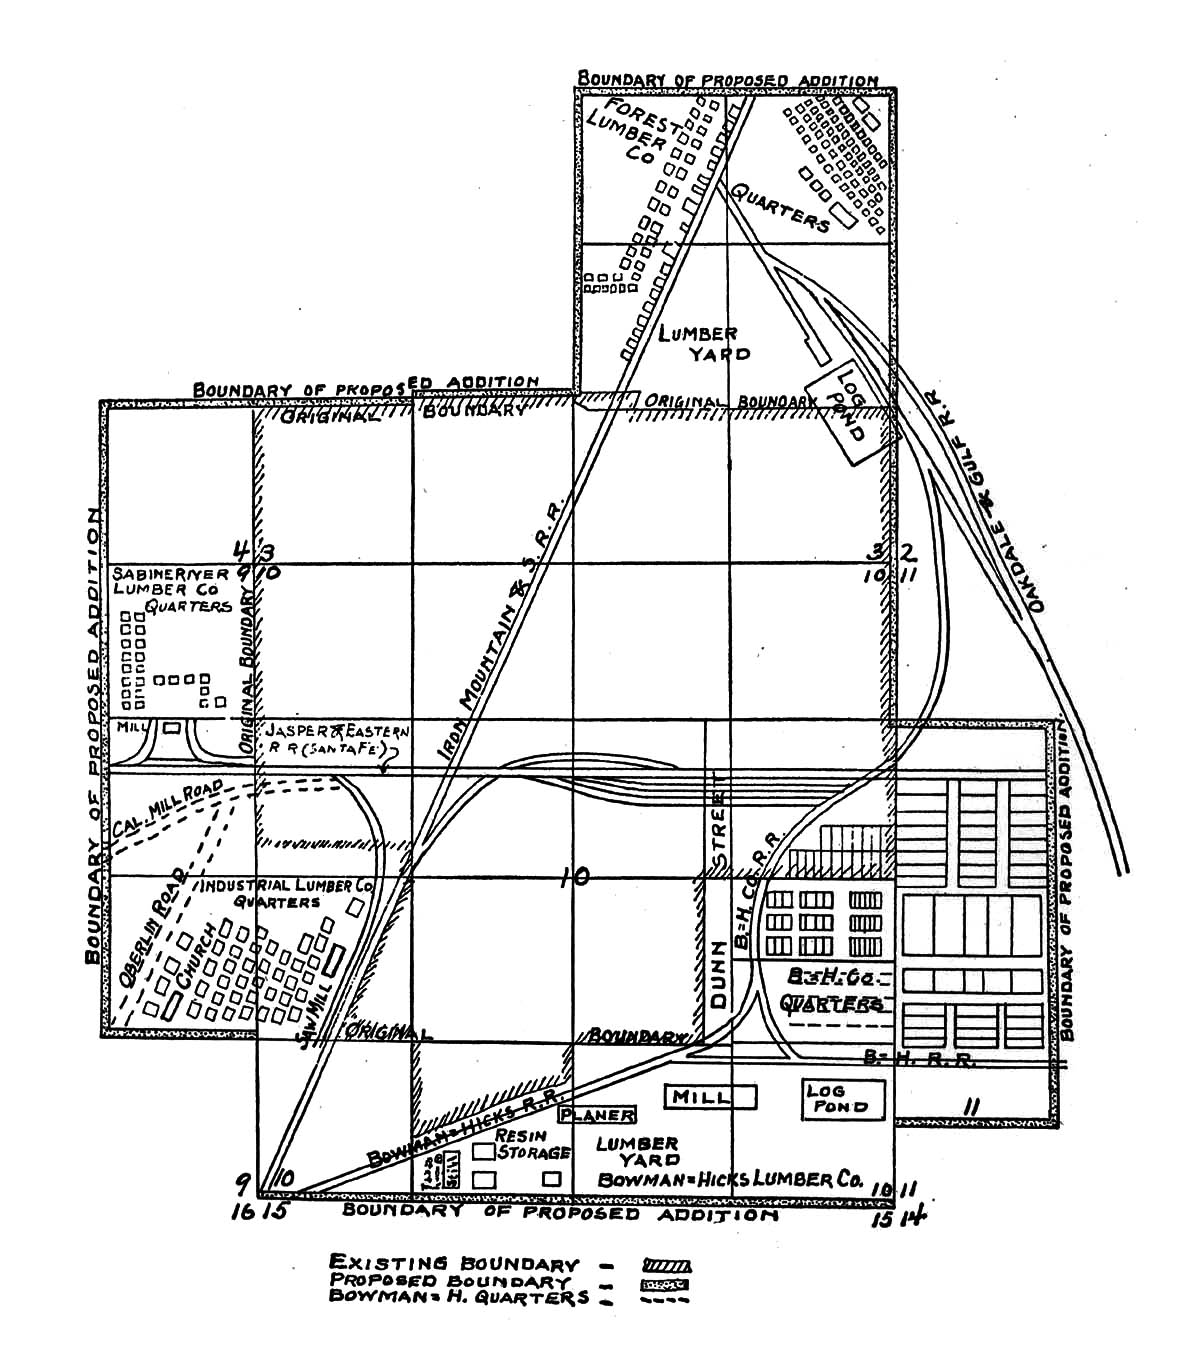 Bowman-Hicks Lumber Company (La.), Map Showing Mill Layout at Oakdale, Louisiana in 1918.